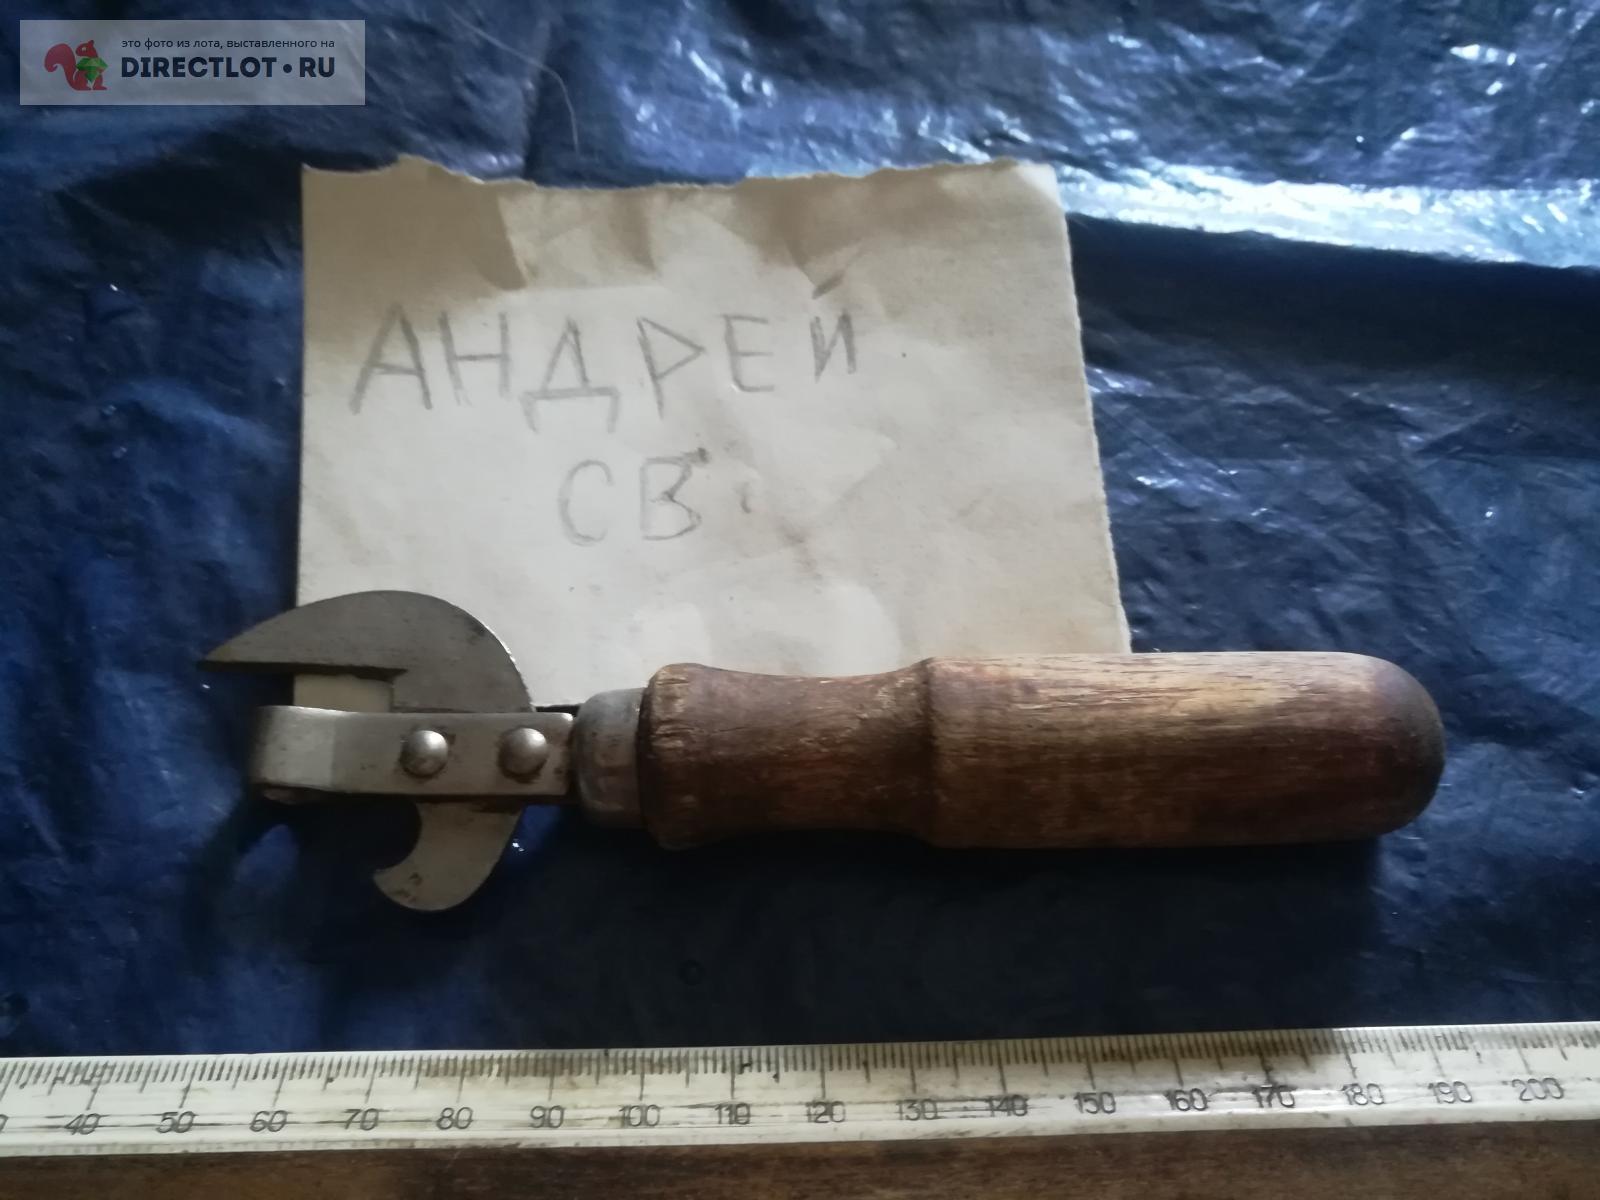 консервный нож советский  в Омске цена 70,00 Р на DIRECTLOT.RU .